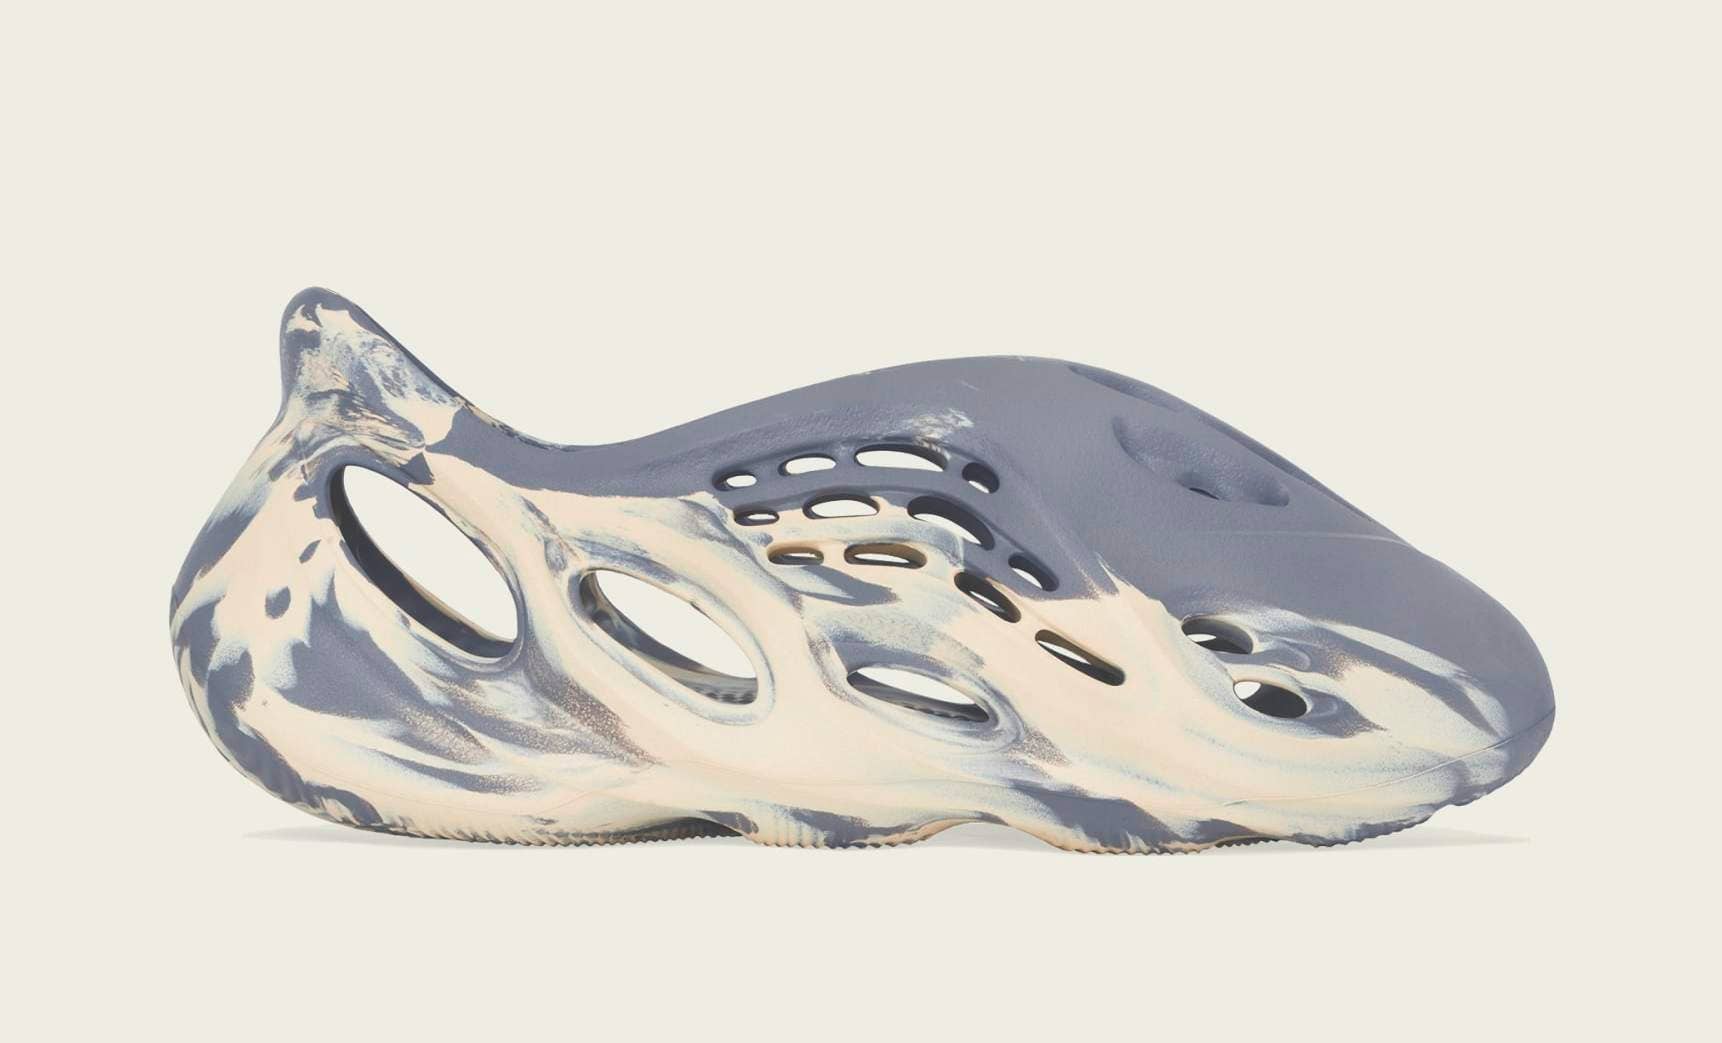 Adidas Yeezy Foam Runner 'Mxt Moon Gray' GV7904 Lateral